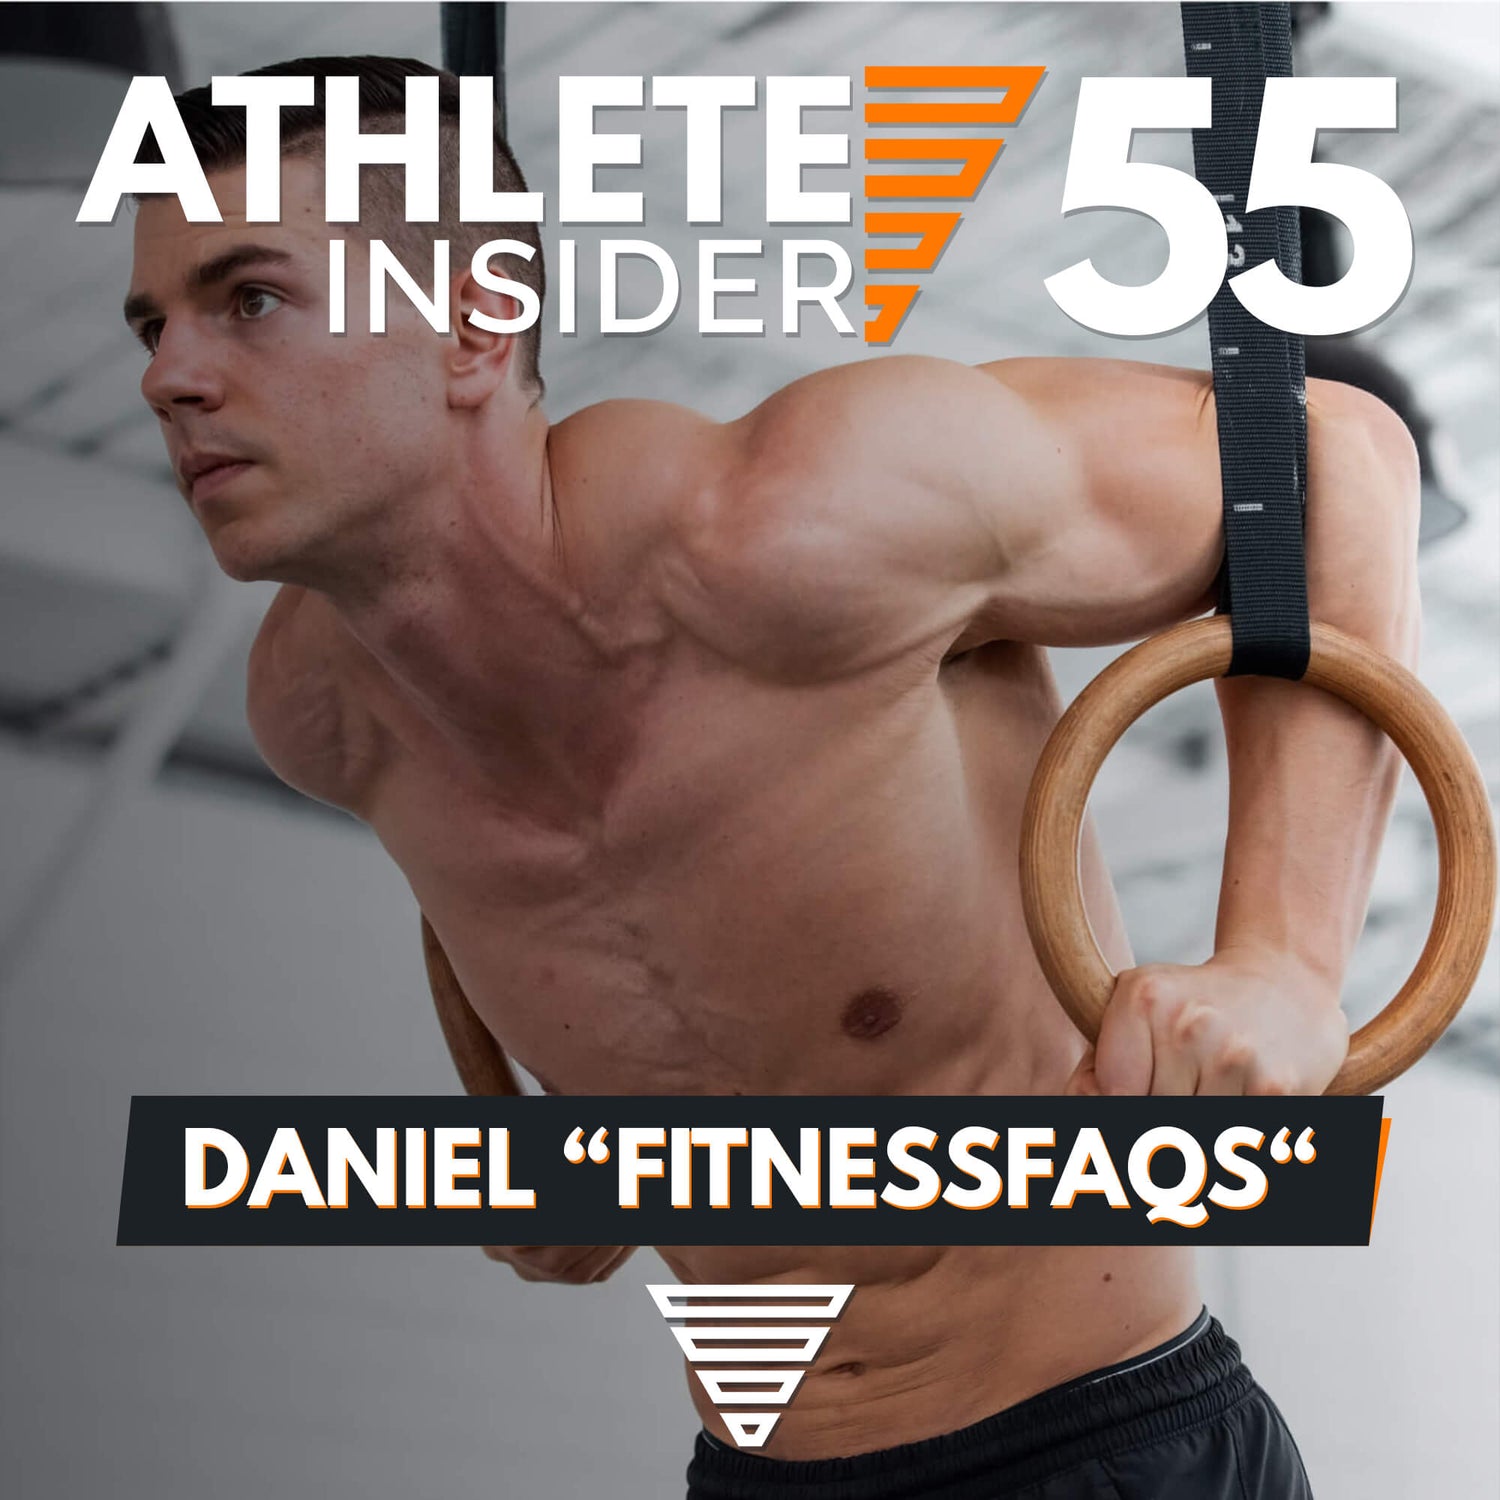 DANIEL "FITNESSFAQS" | Training Methods & Insights | Interview | The Athlete Insider Podcast #55